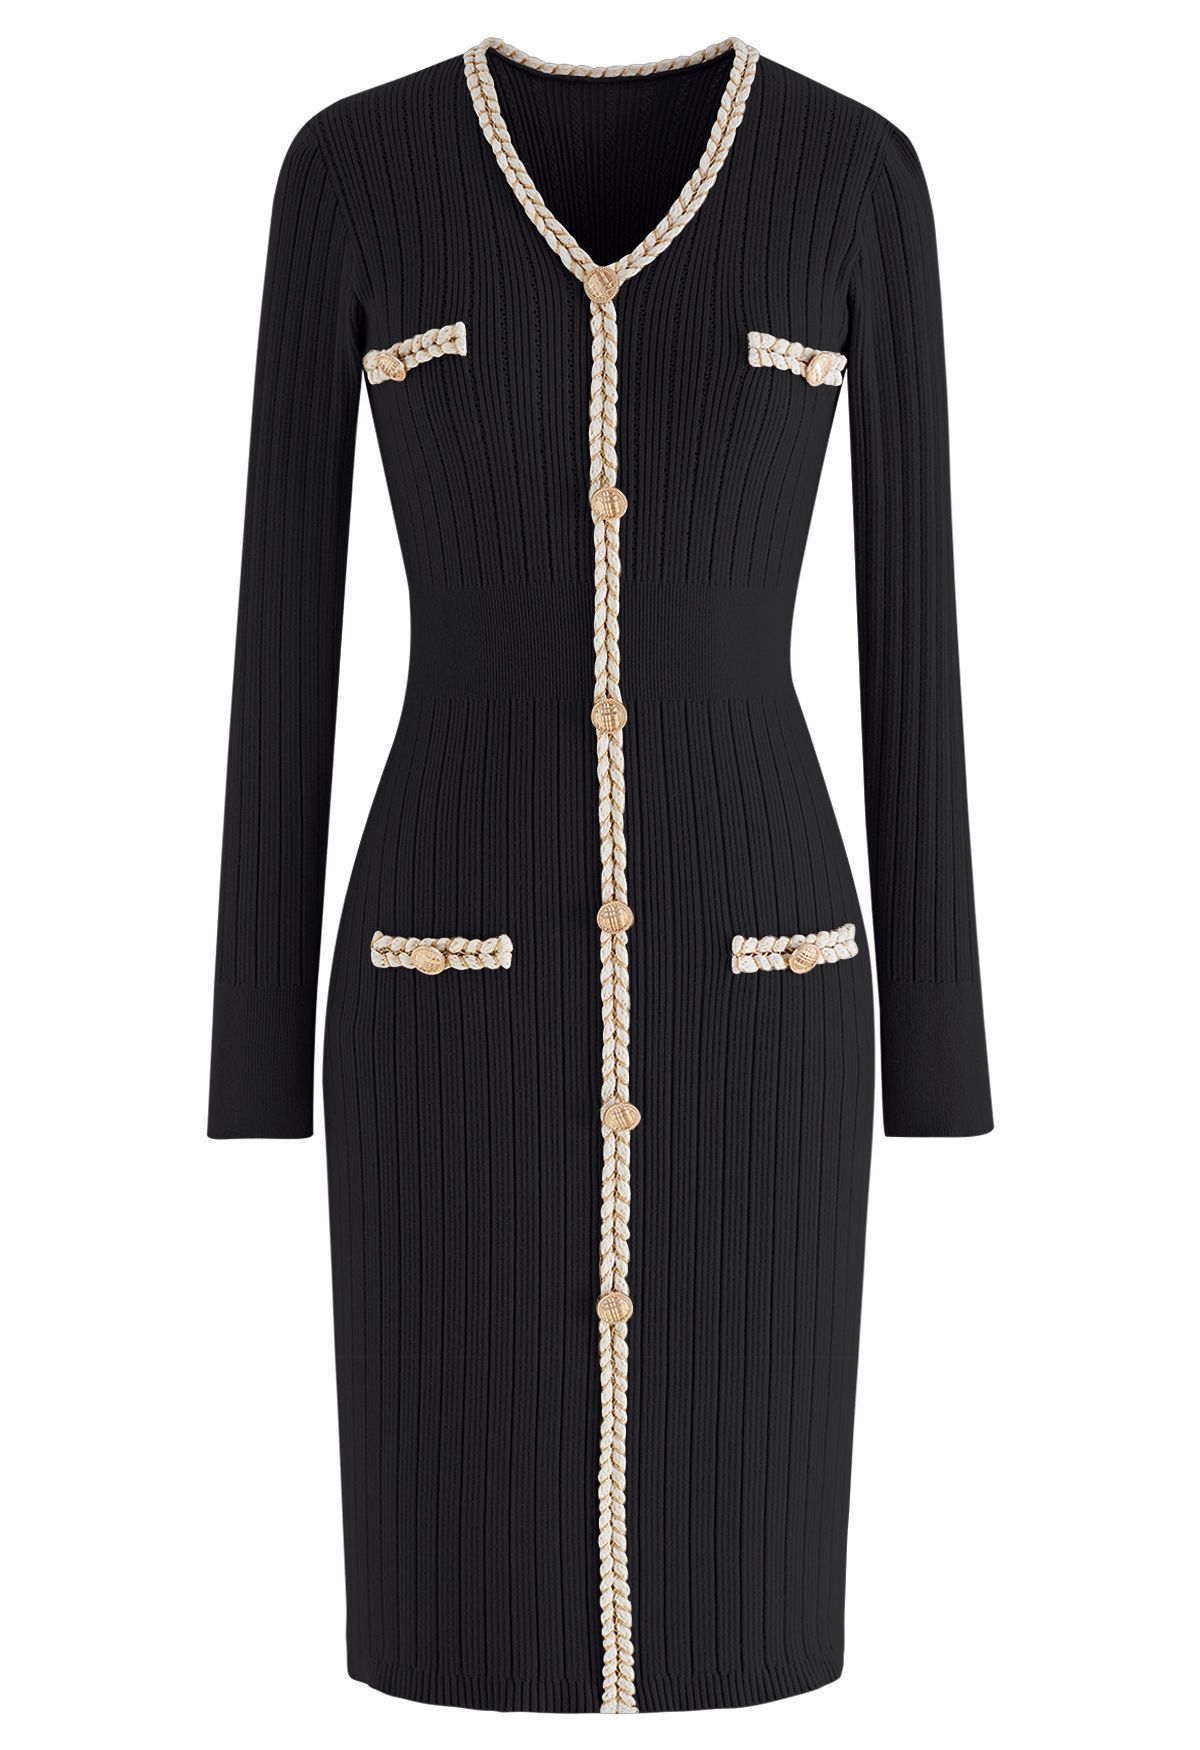 Braided Edge Golden Button Bodycon Knit Dress in Black | Chicwish